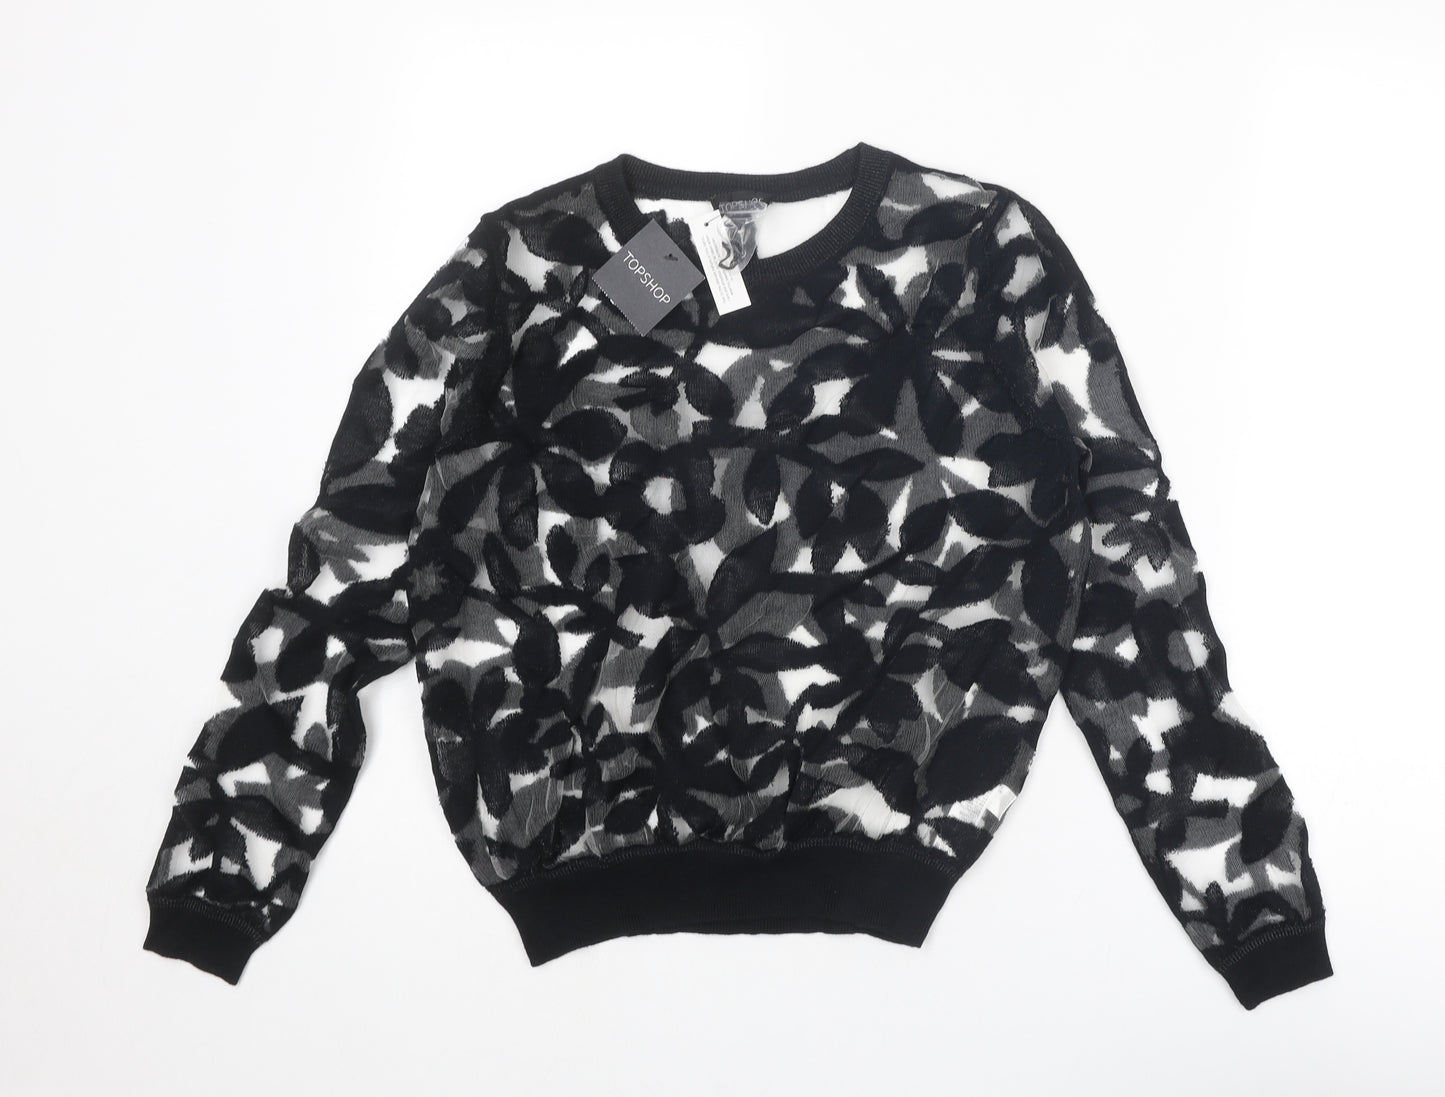 Topshop Womens Black Round Neck Geometric Cotton Pullover Jumper Size 8